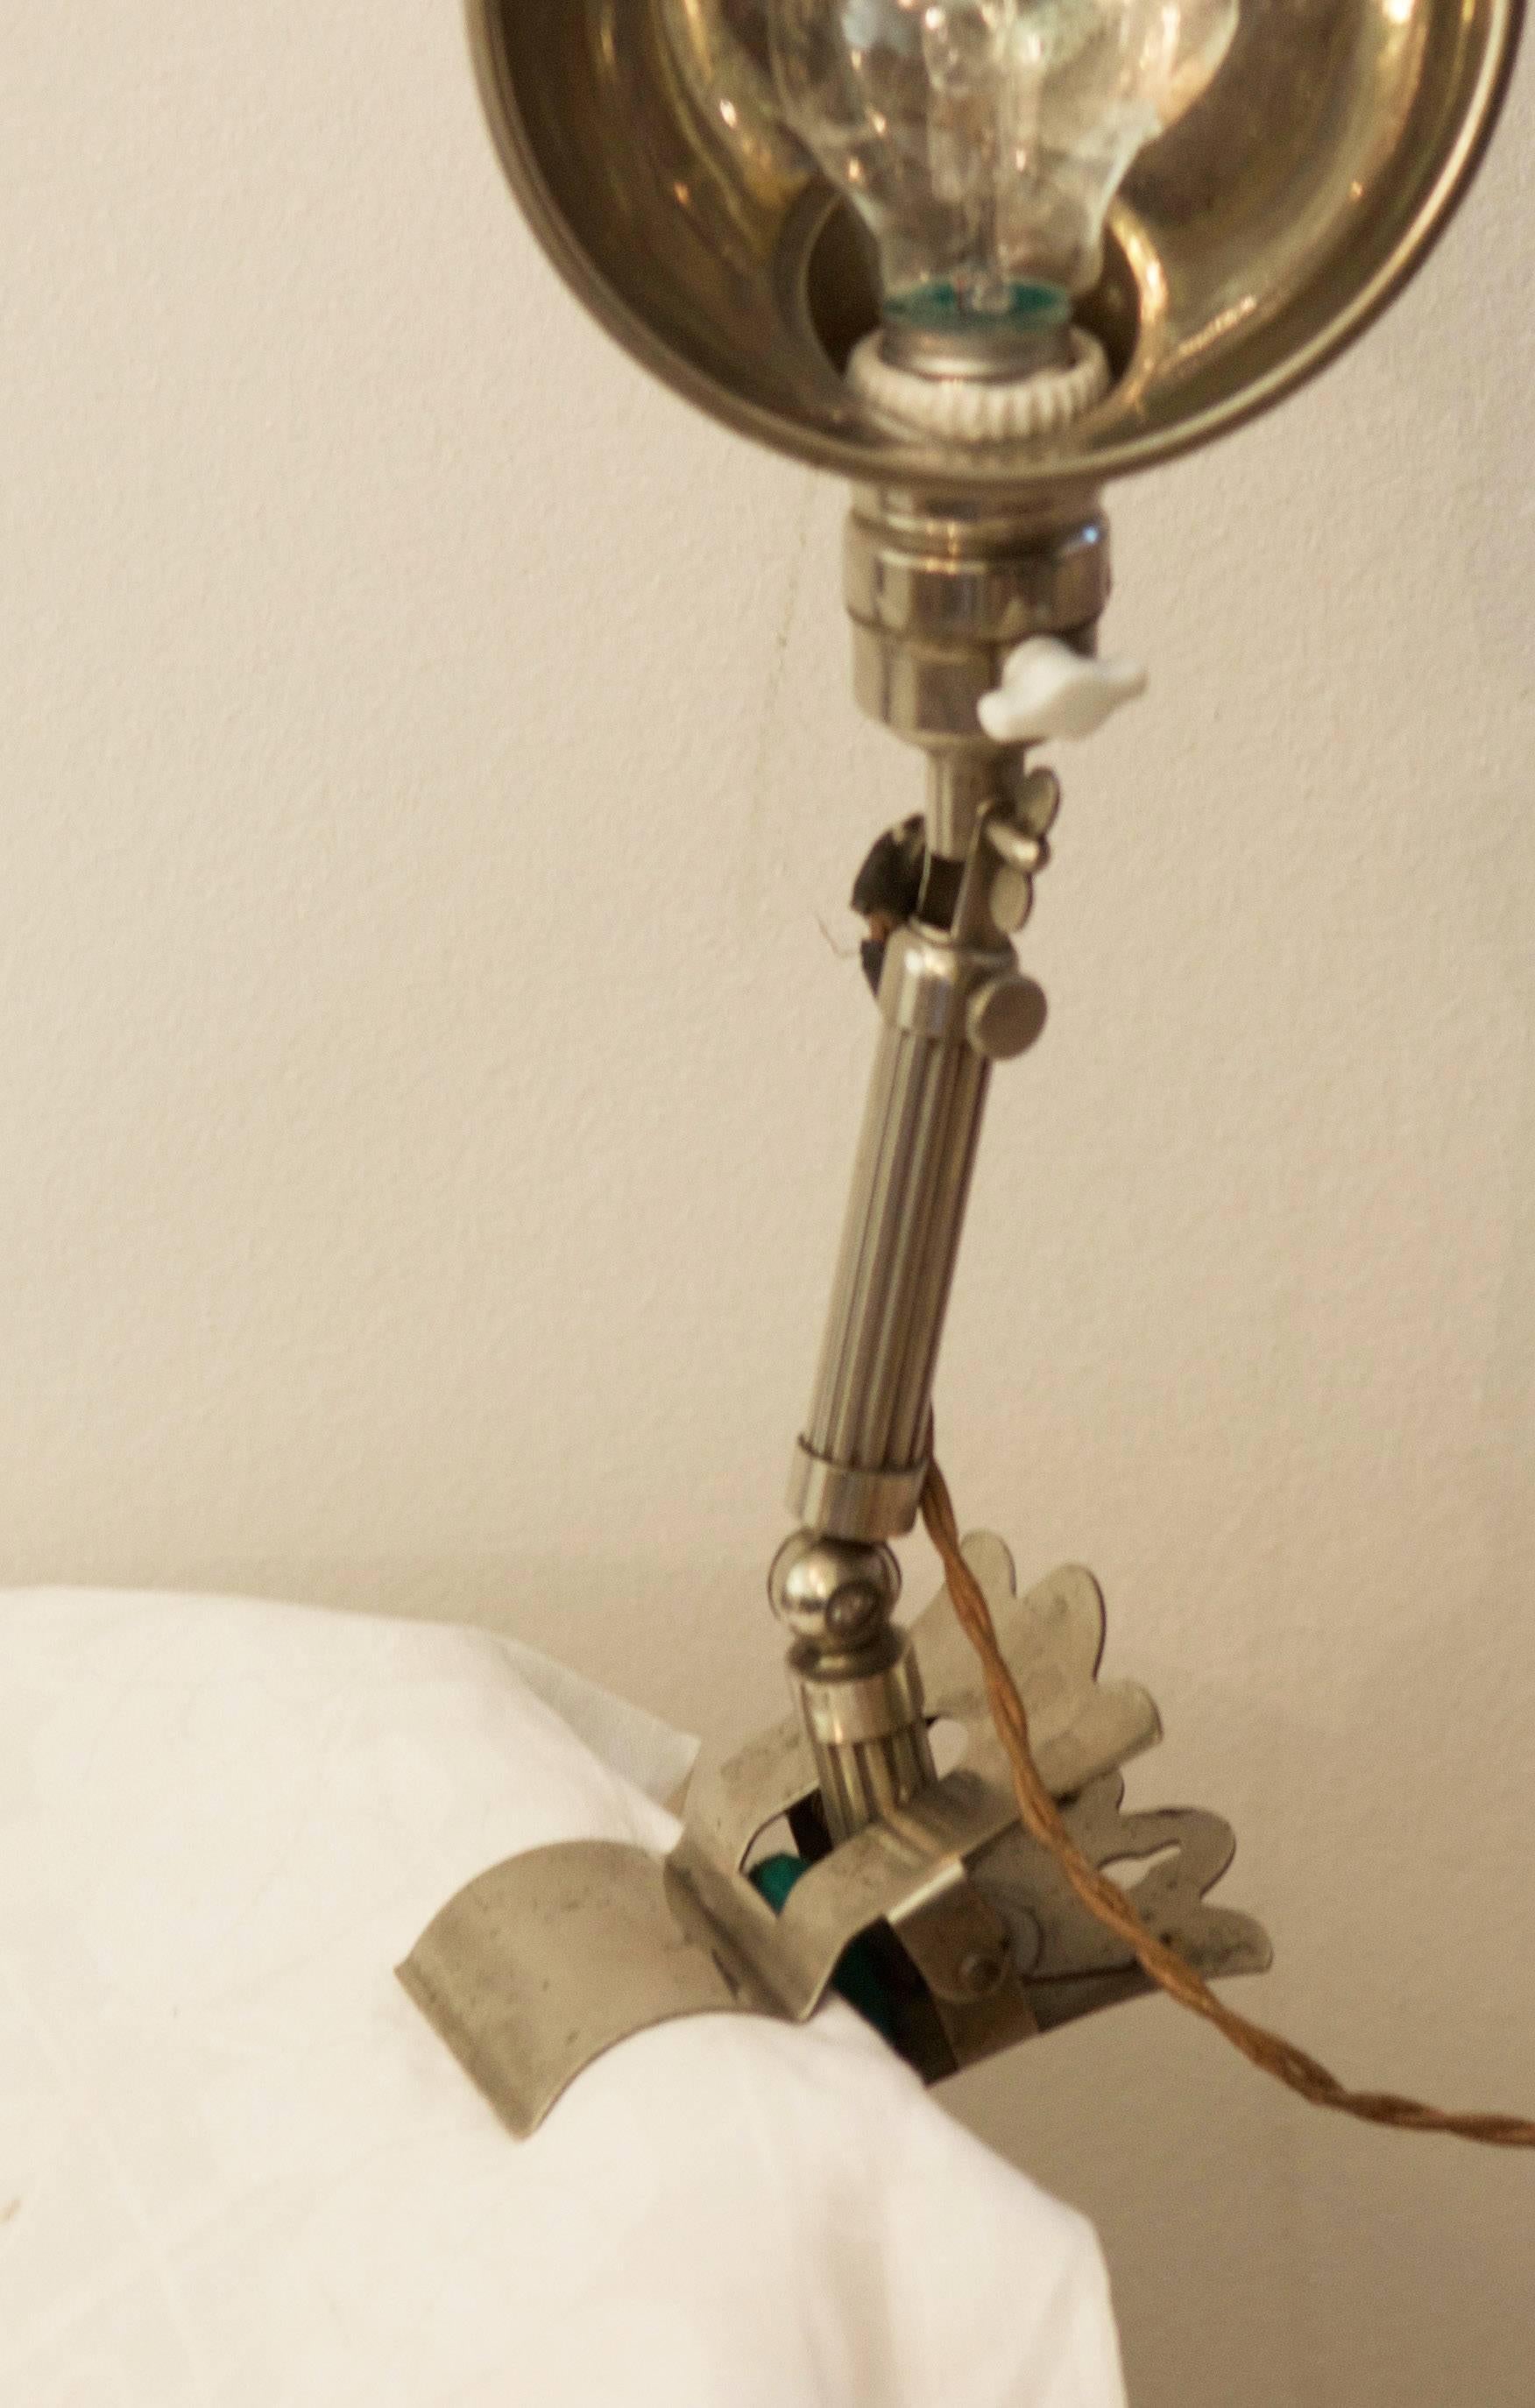 clamp lamp vintage